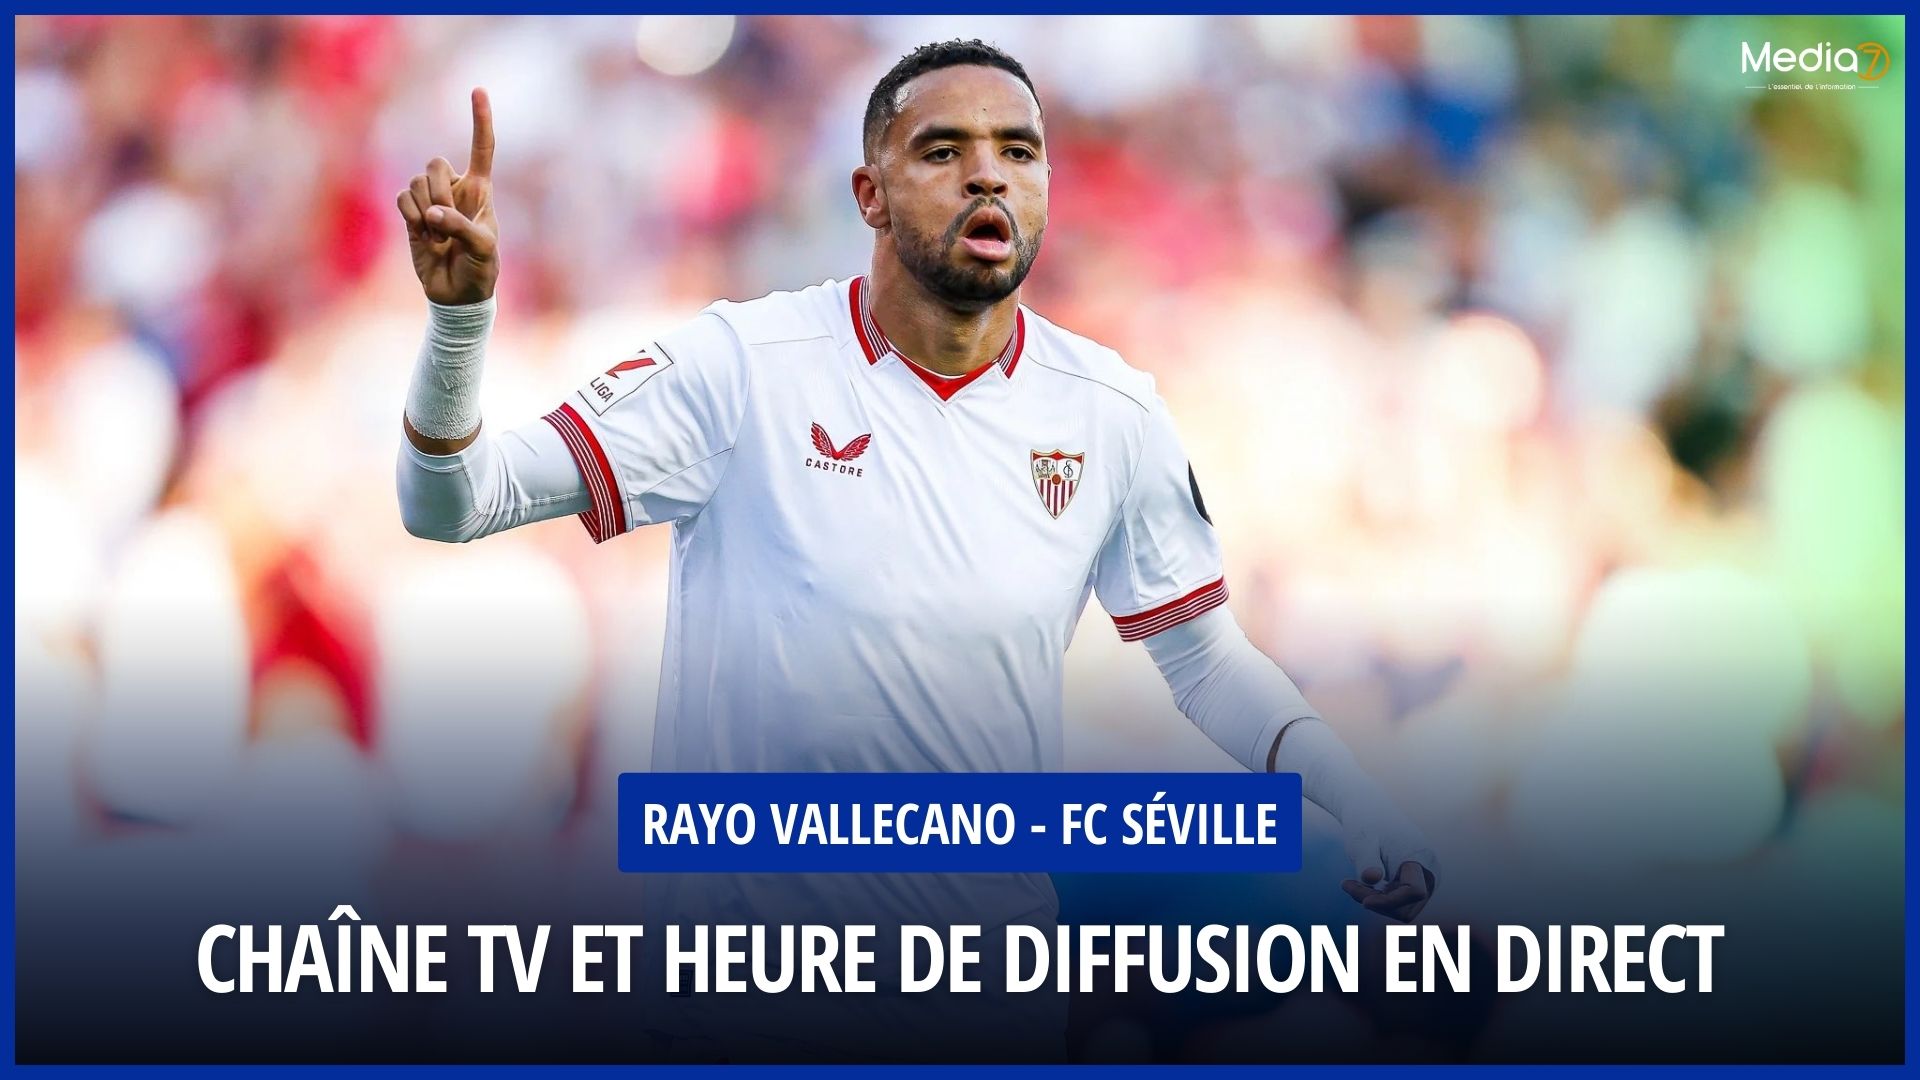 Rayo Vallecano - Sevilla FC Match Live: TV Channel and Broadcast Time - Media7